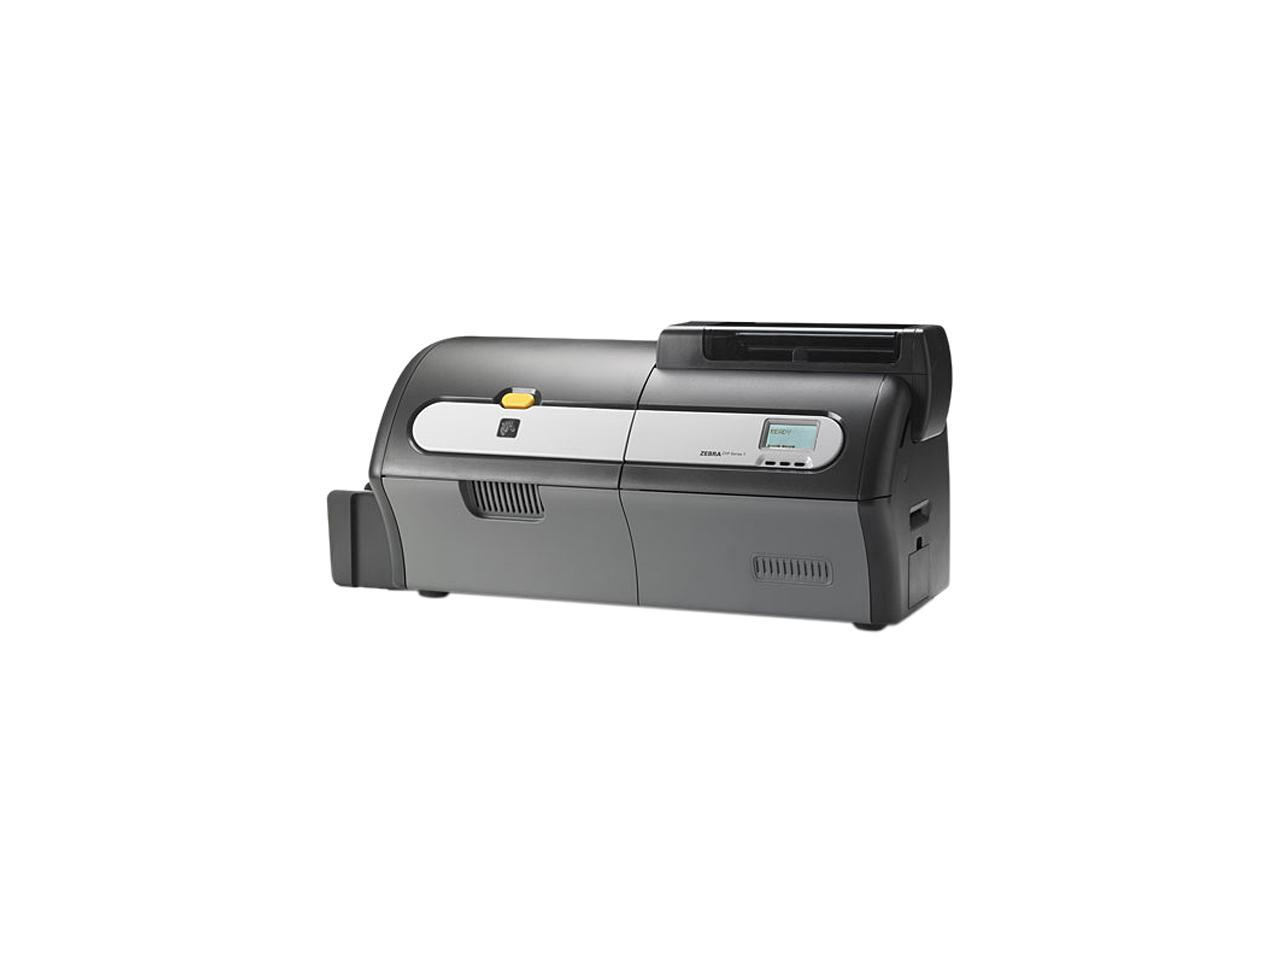 Zebra Z71-000C0000US00 ZXP Series 7 ID Card Printer System